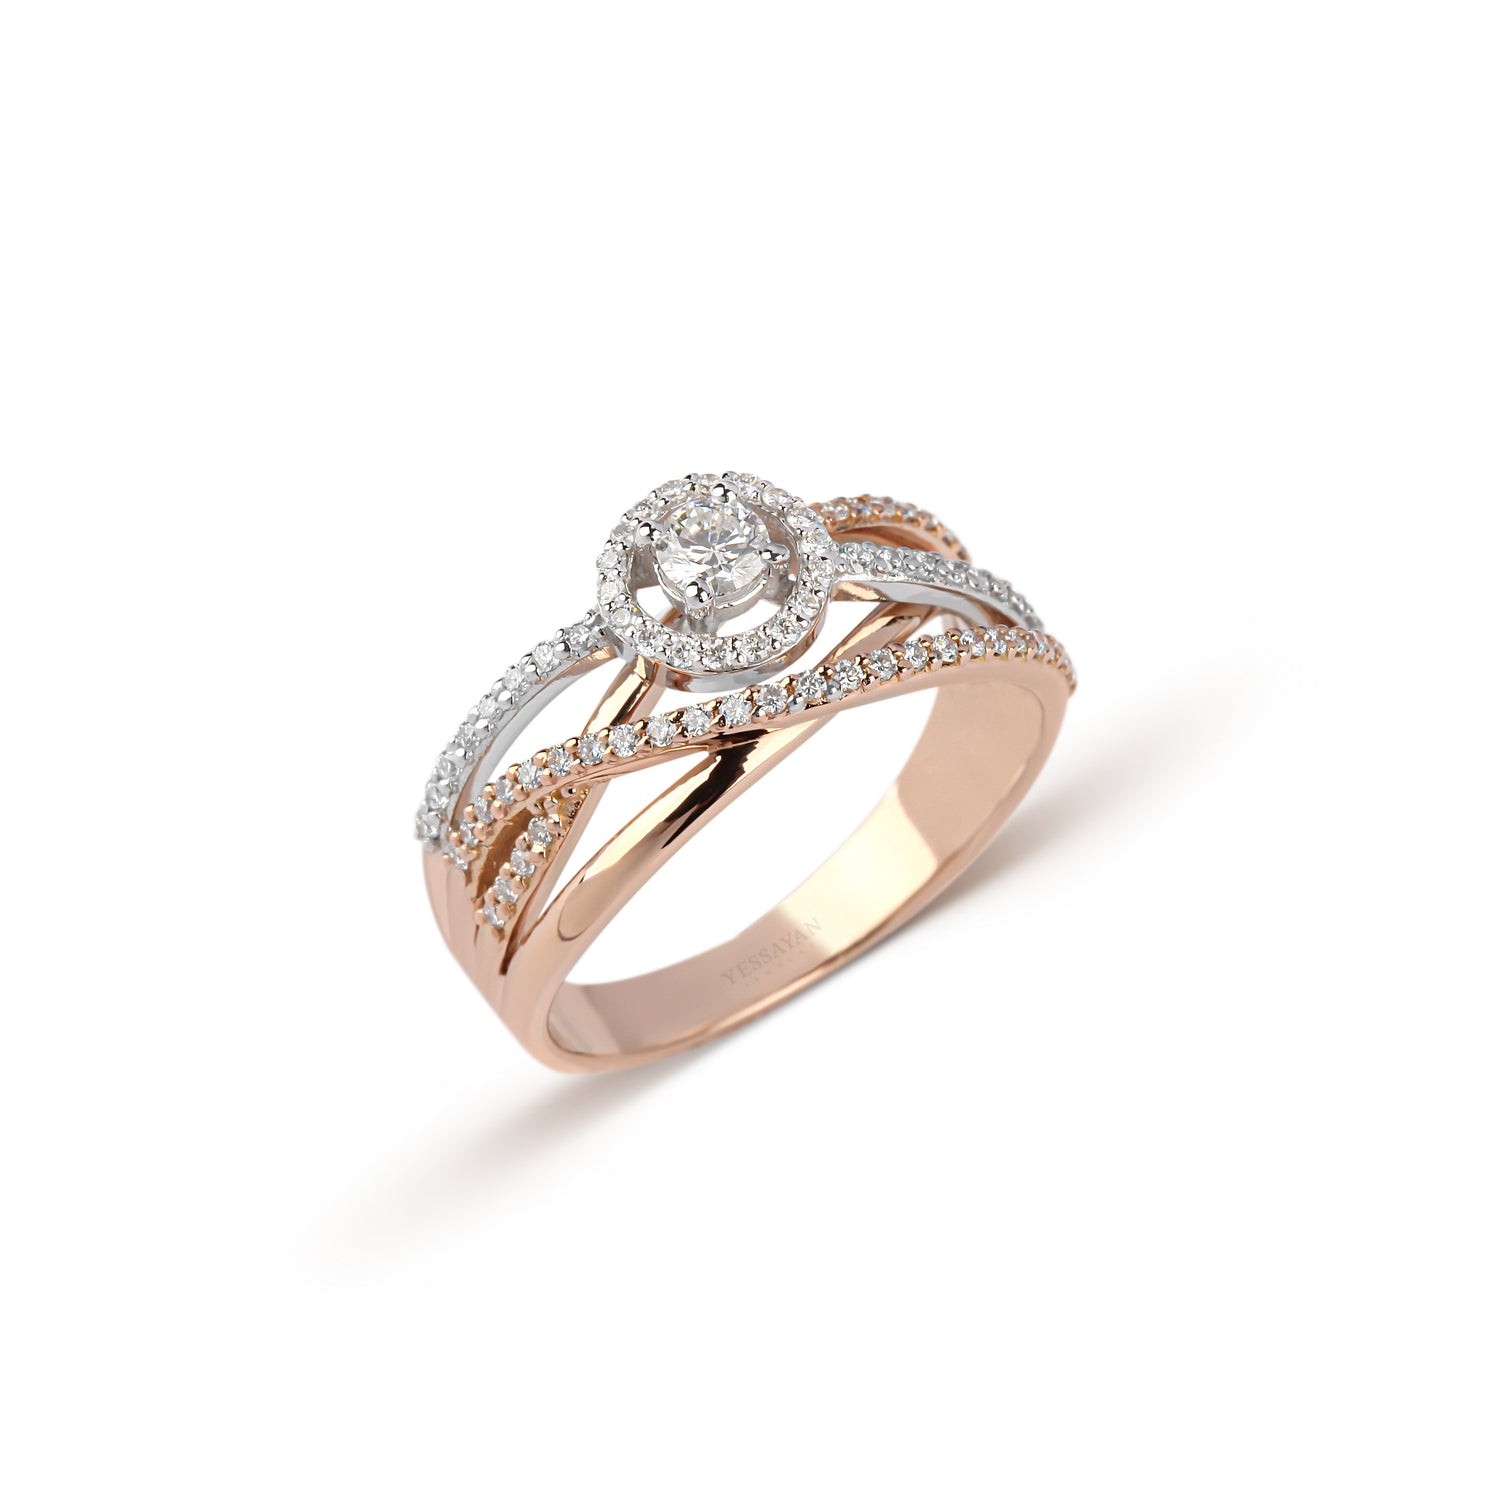 Two-Tone Overlapping Bands & Diamond Center Ring | diamond jewelers | diamond rings